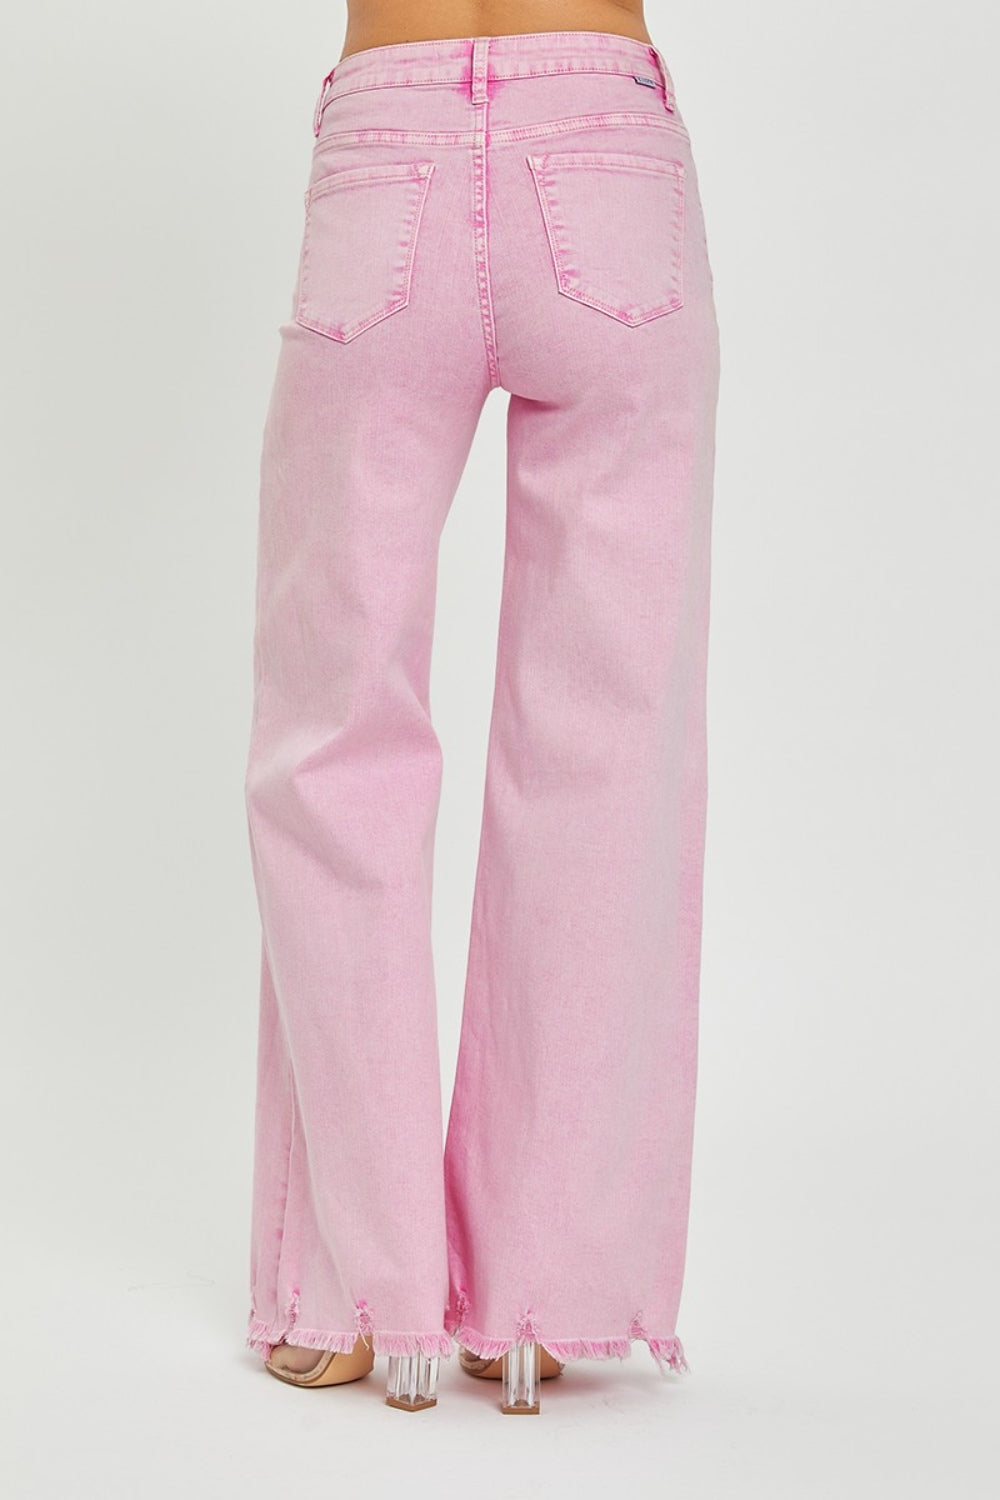 Paige Pink High Rise Wide Leg RISEN Jeans